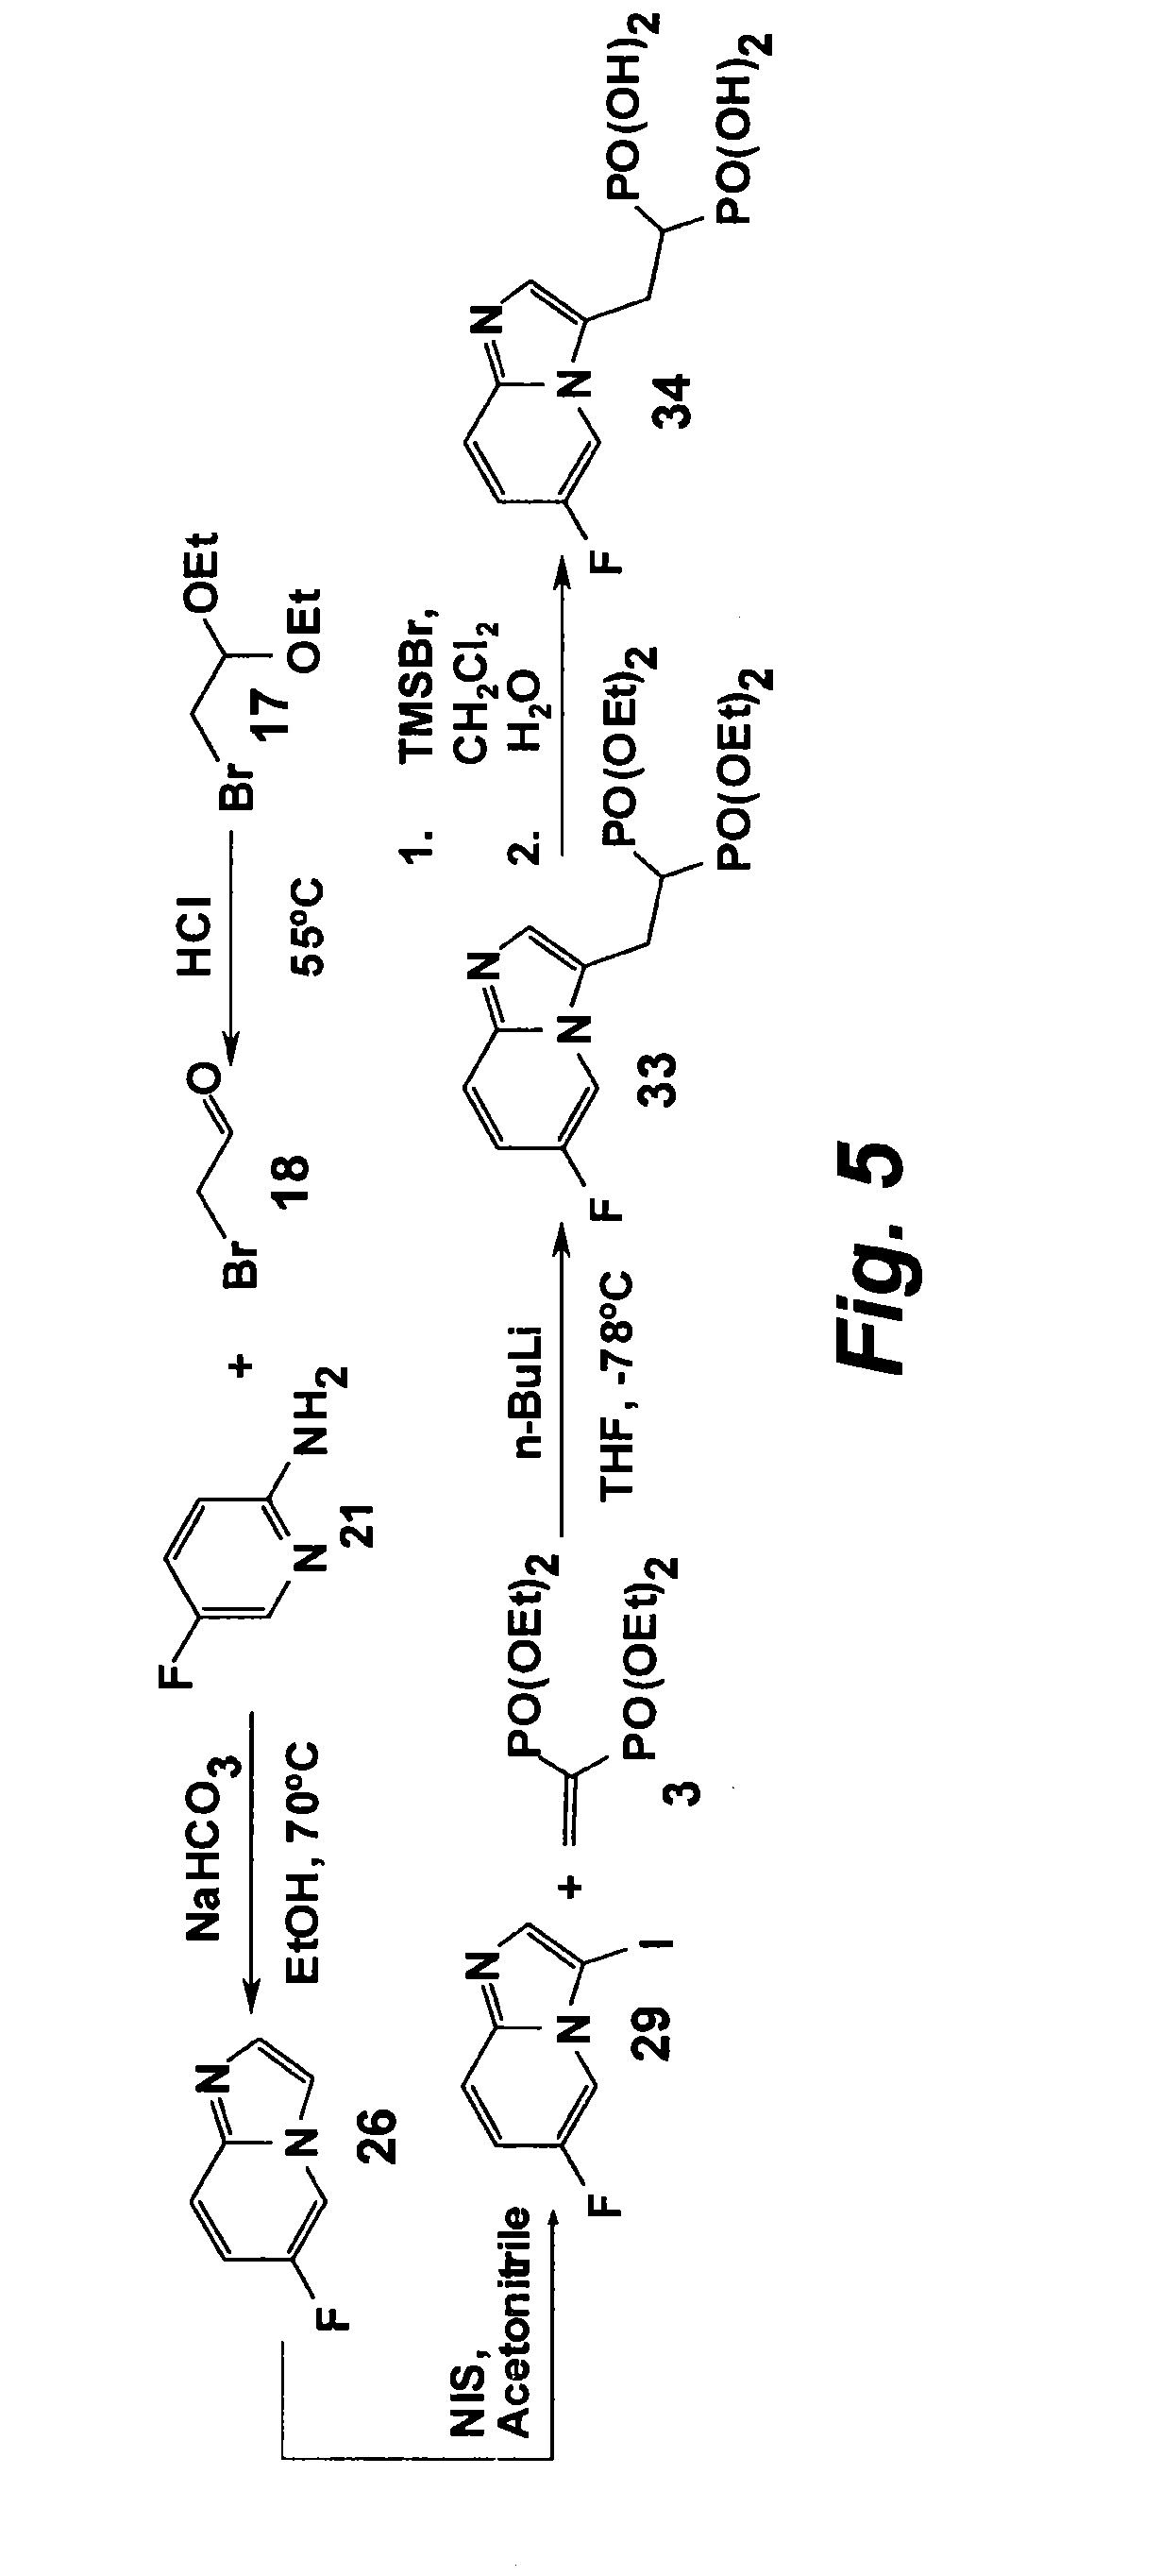 Imidazo[1,2-a] pyridinyl bisphosphonates